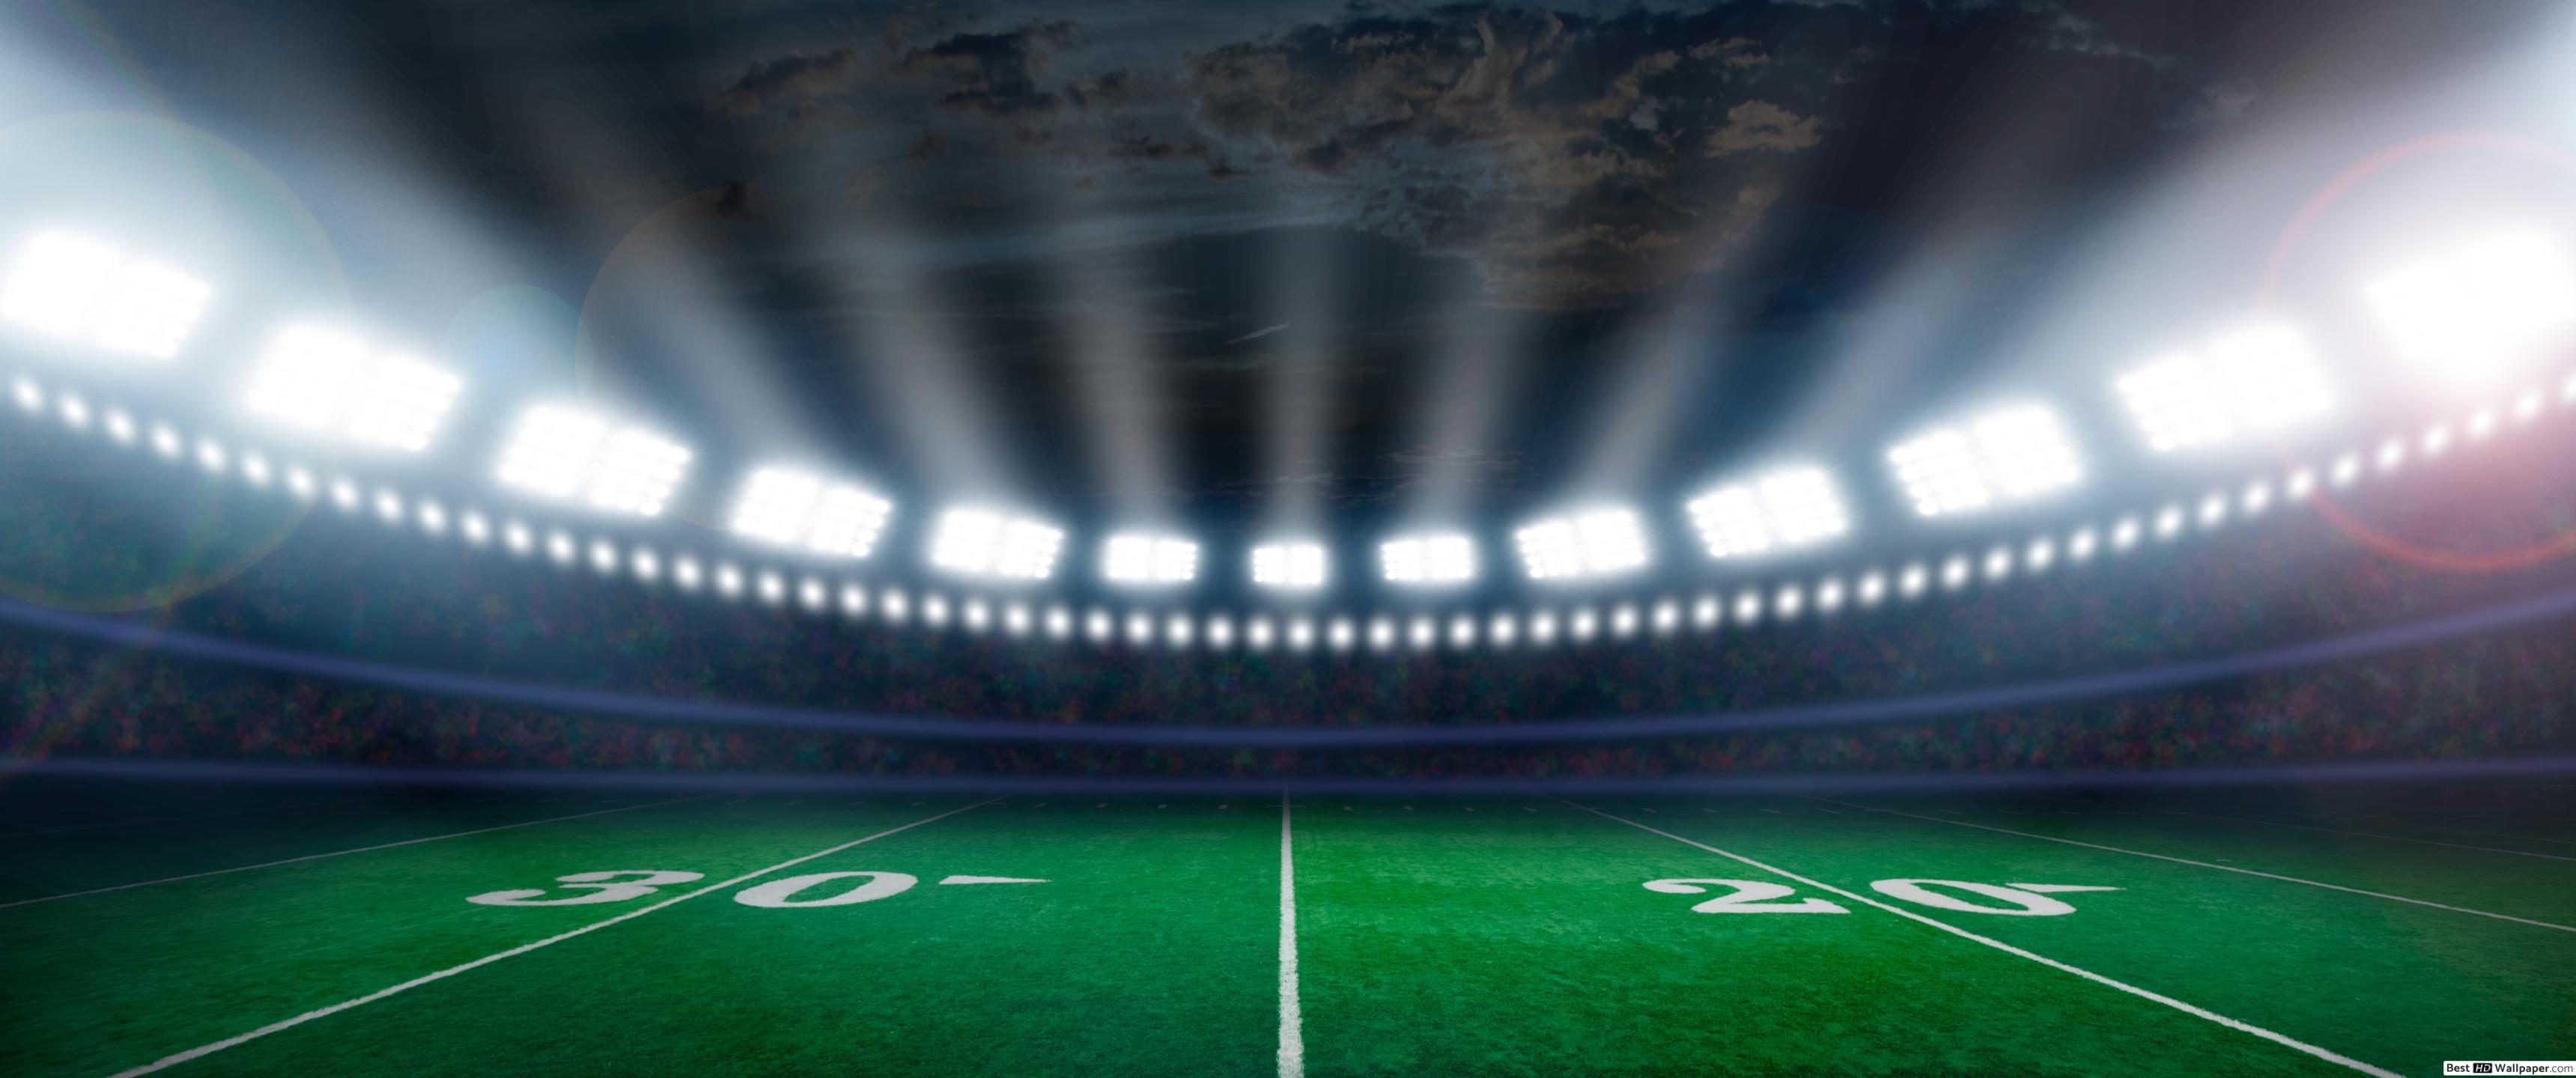 Football Field Illuminated By Stadium Lights